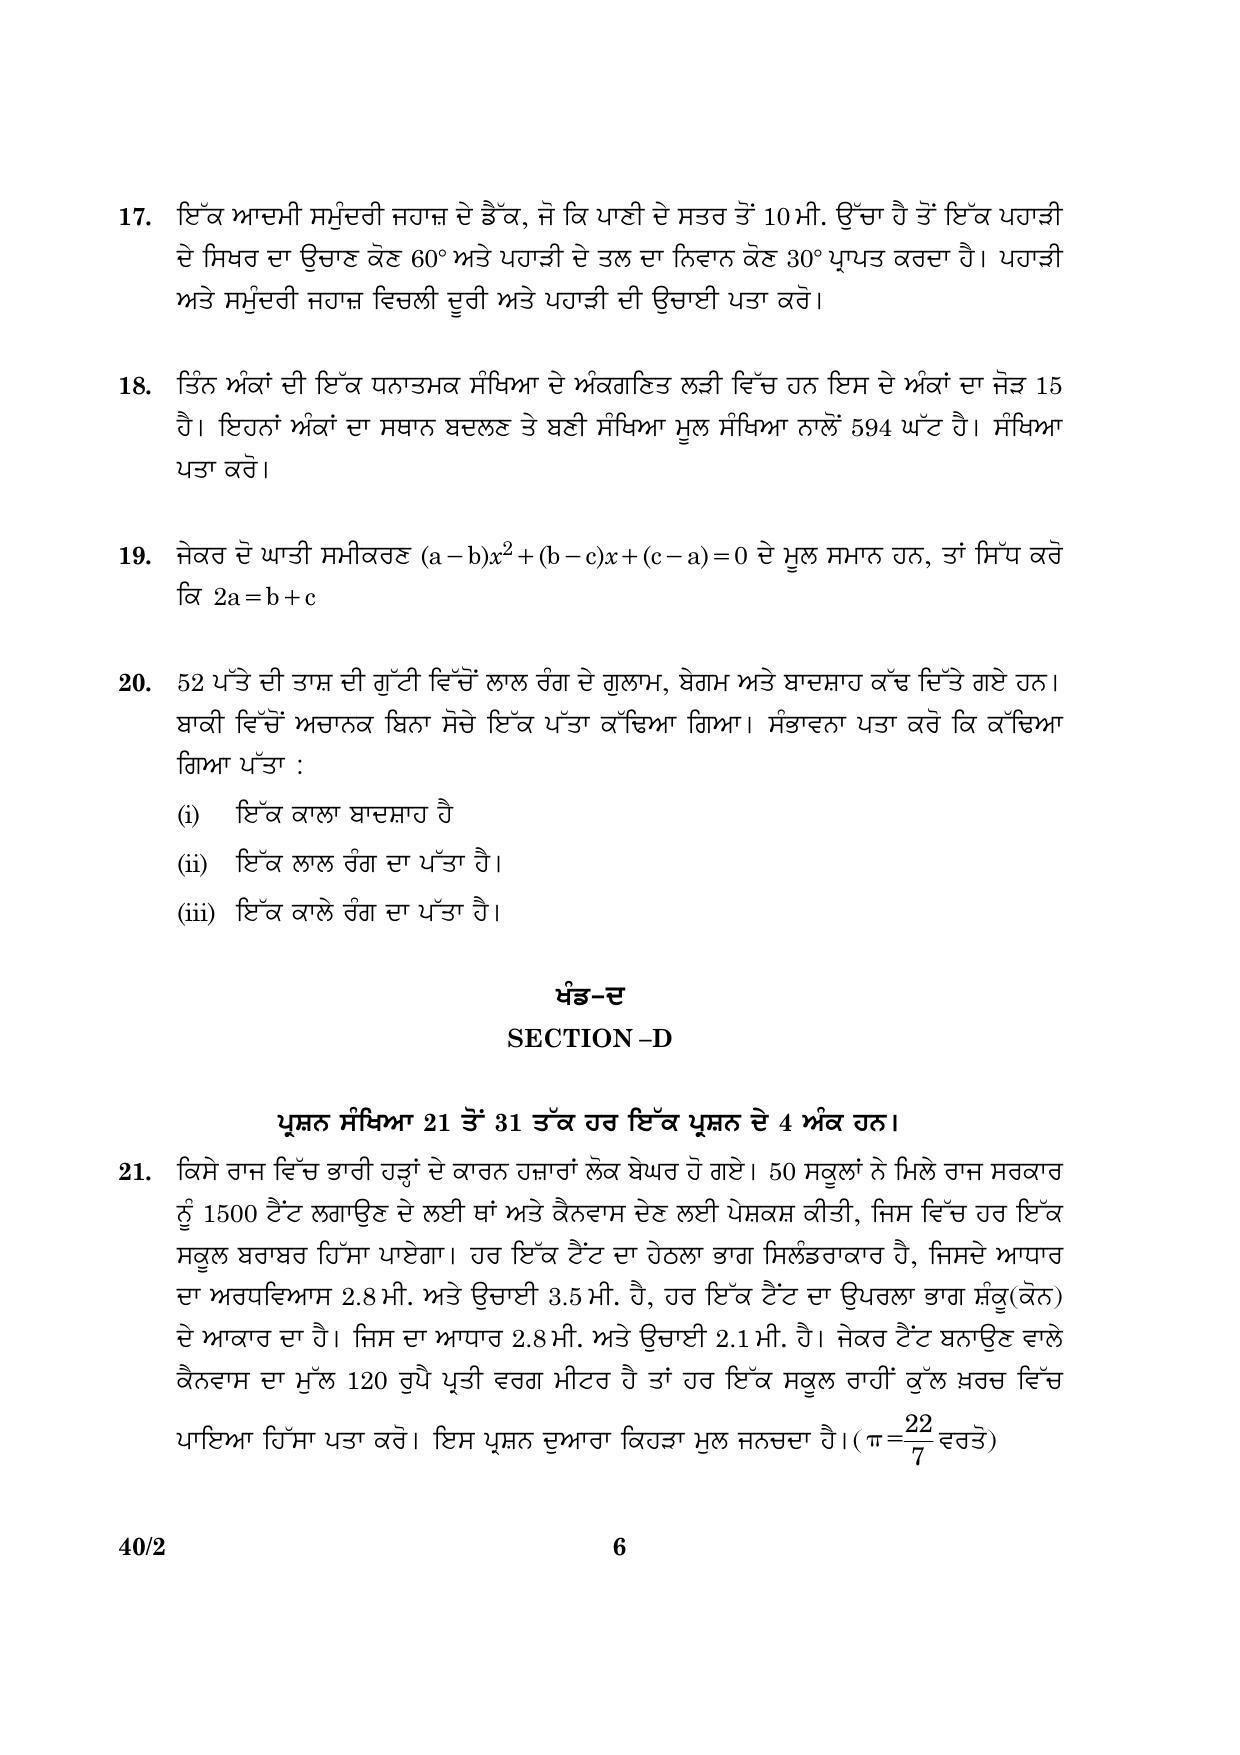 CBSE Class 10 040 Mathematics Punjabi 2 2016 Question Paper - Page 6